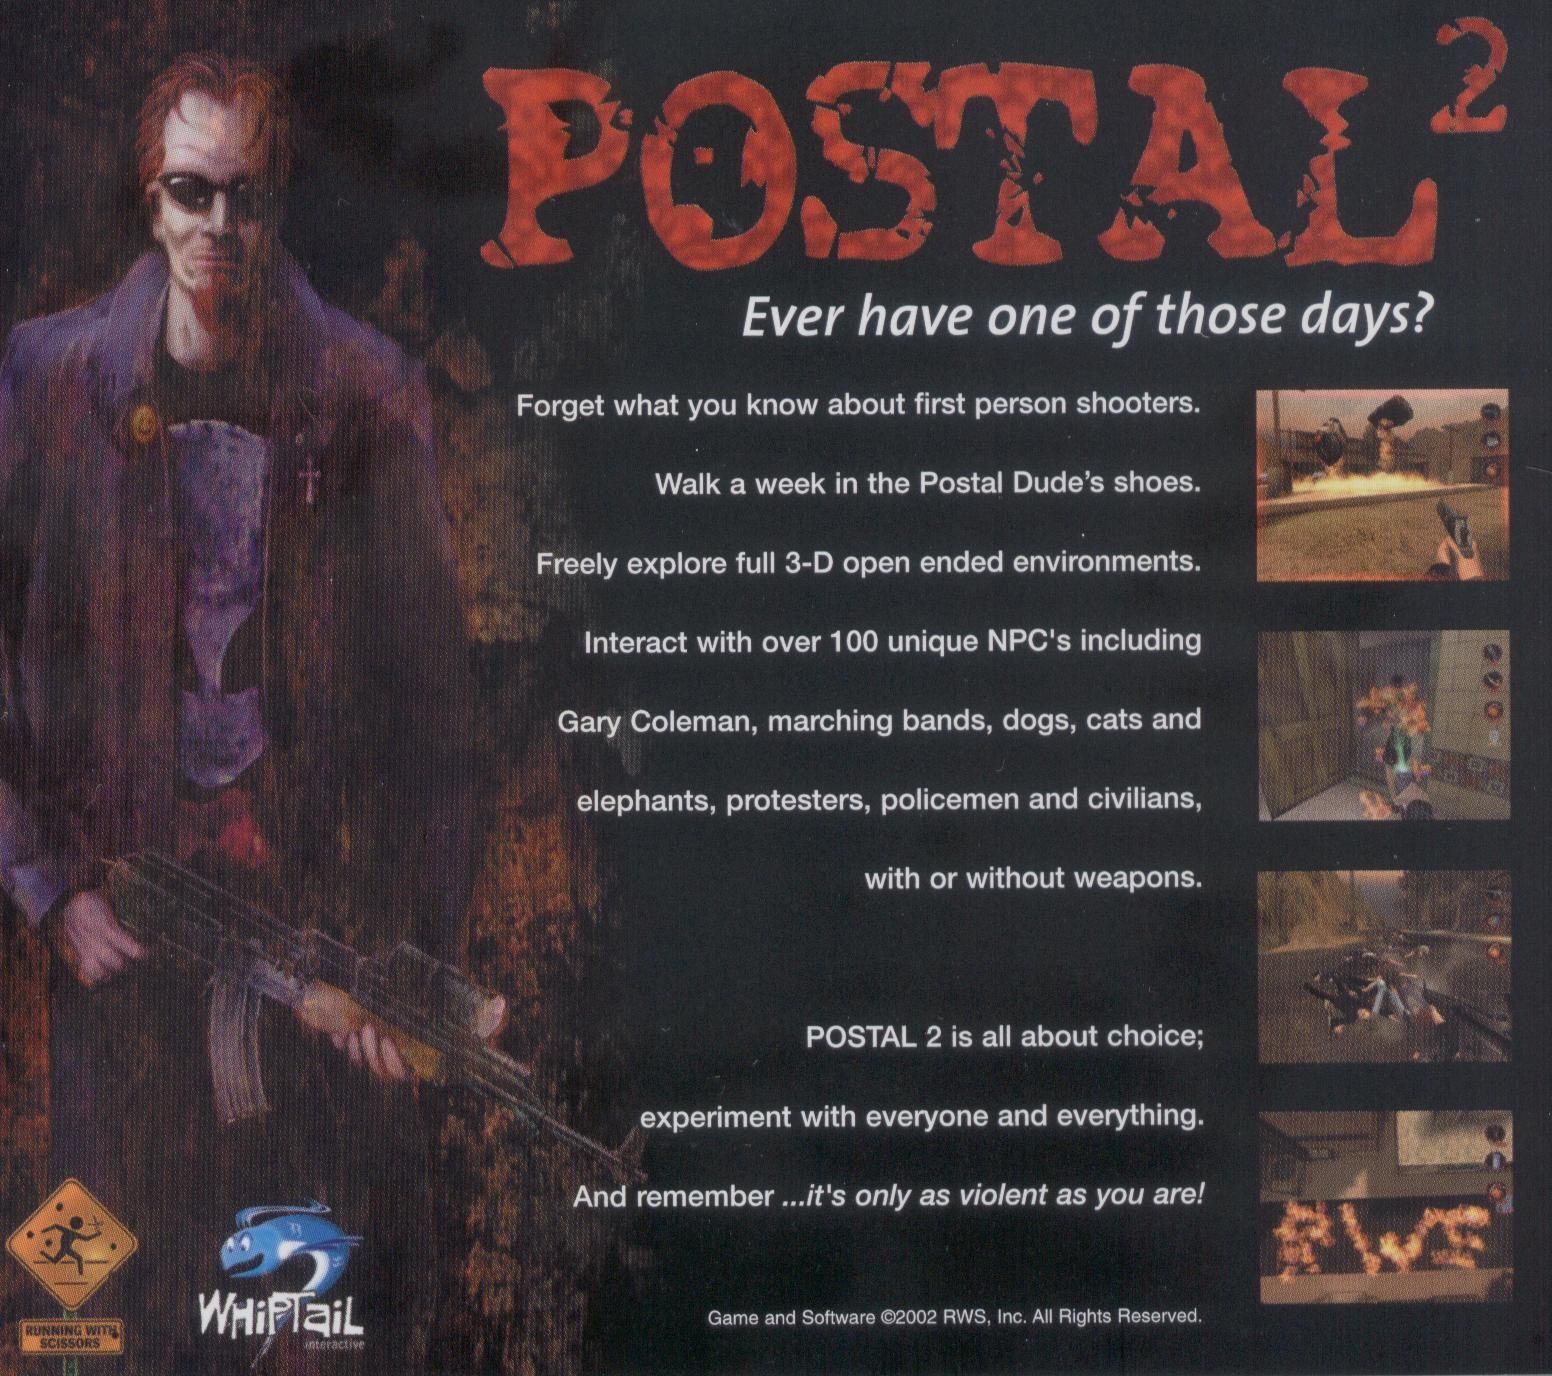 Postal 2 awp delete review скачать игру фото 45